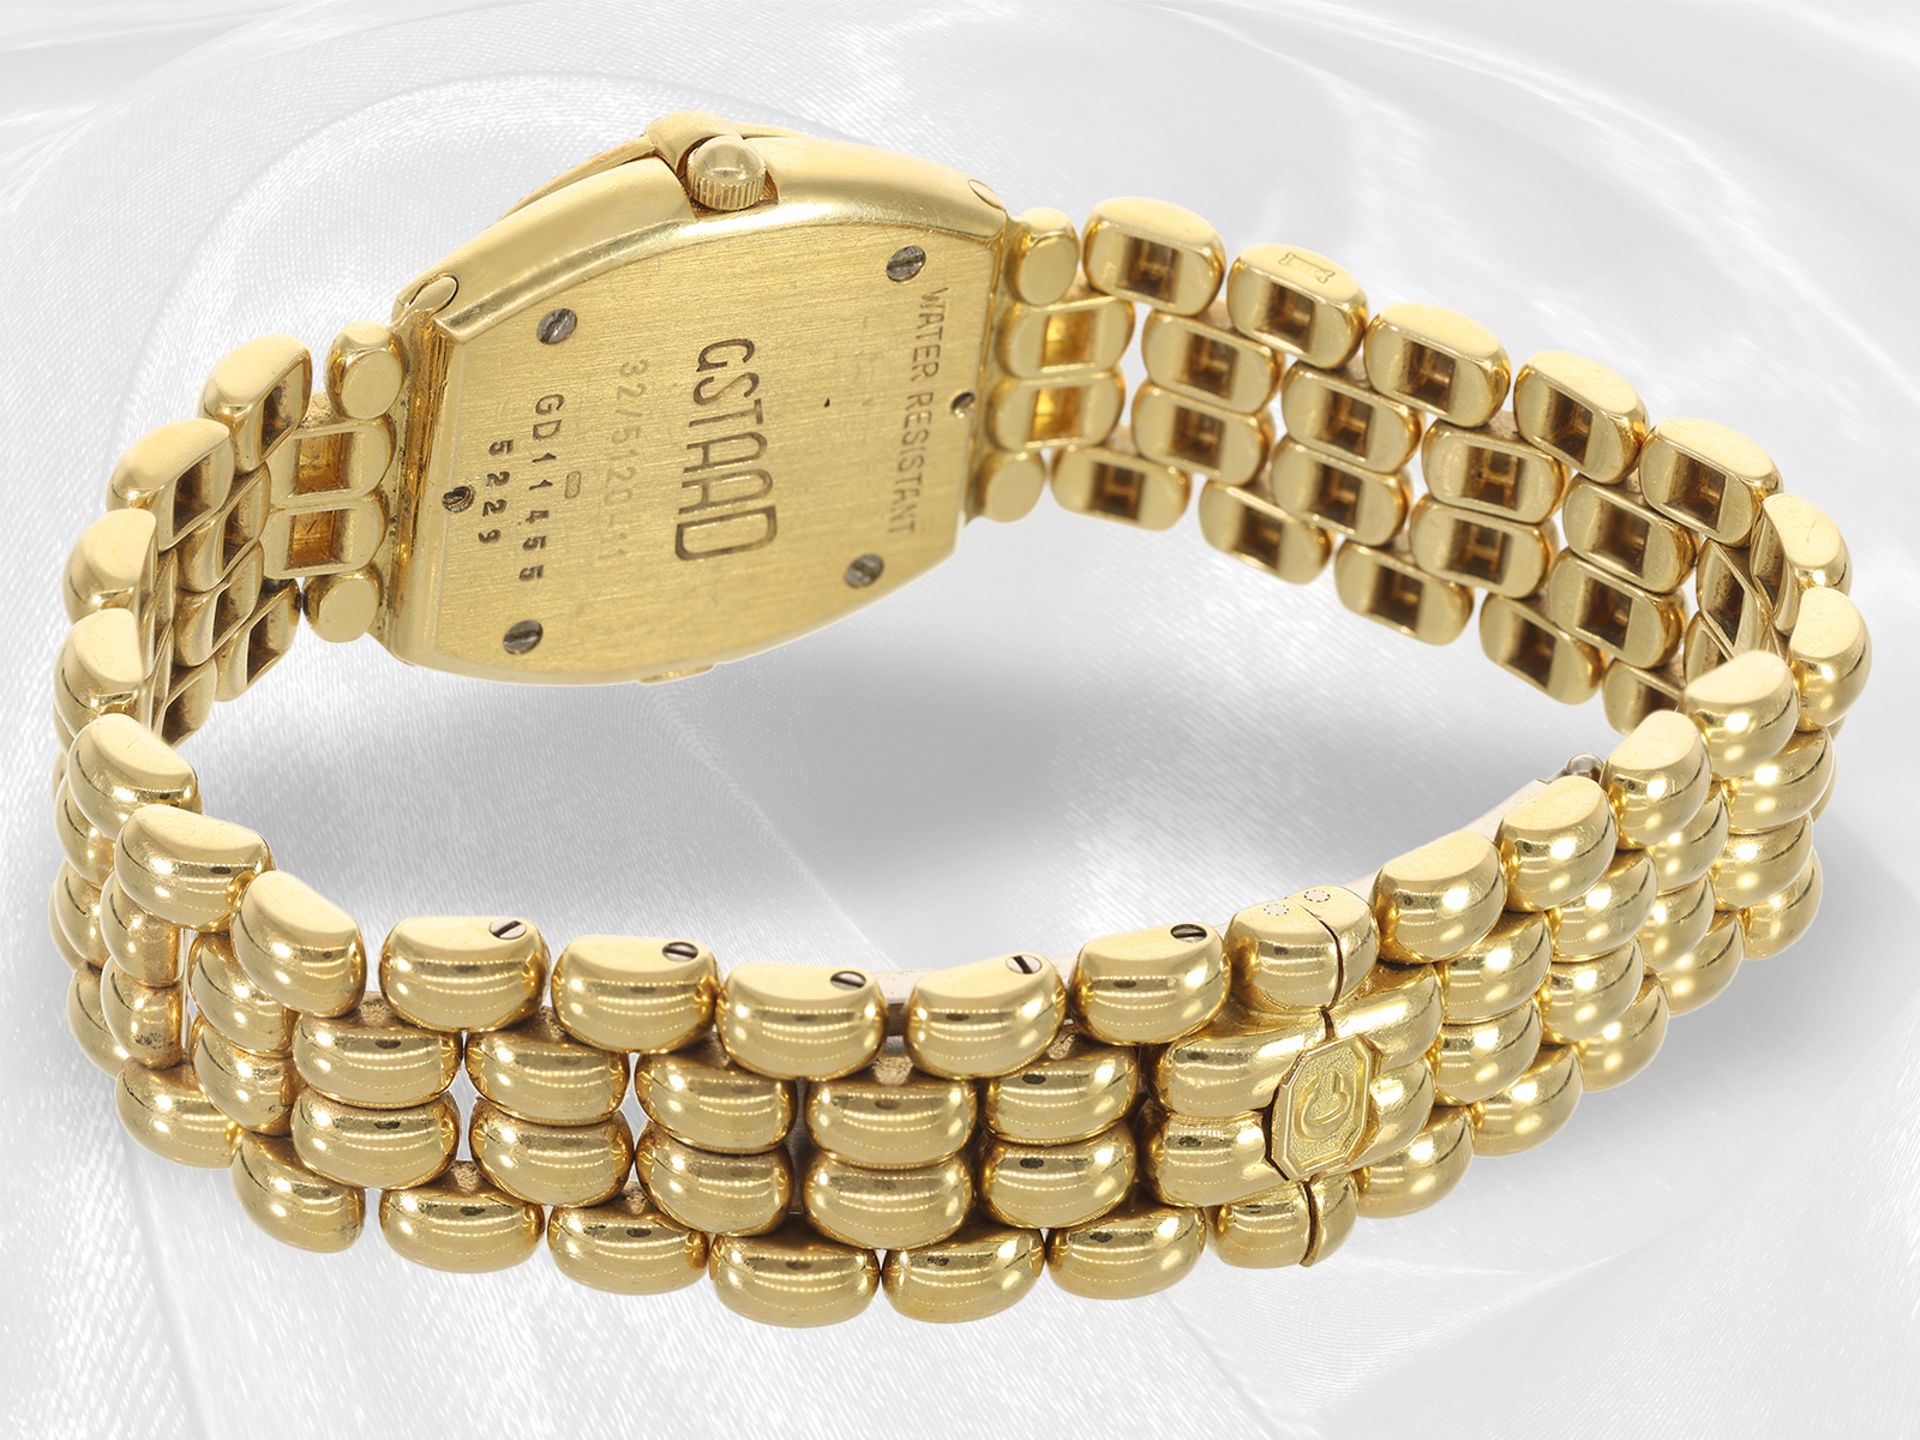 Wristwatch: luxury heavy ladies' watch Chopard "GSTAAD", 18K gold with diamond bezel, Ref.5229 - Image 5 of 5